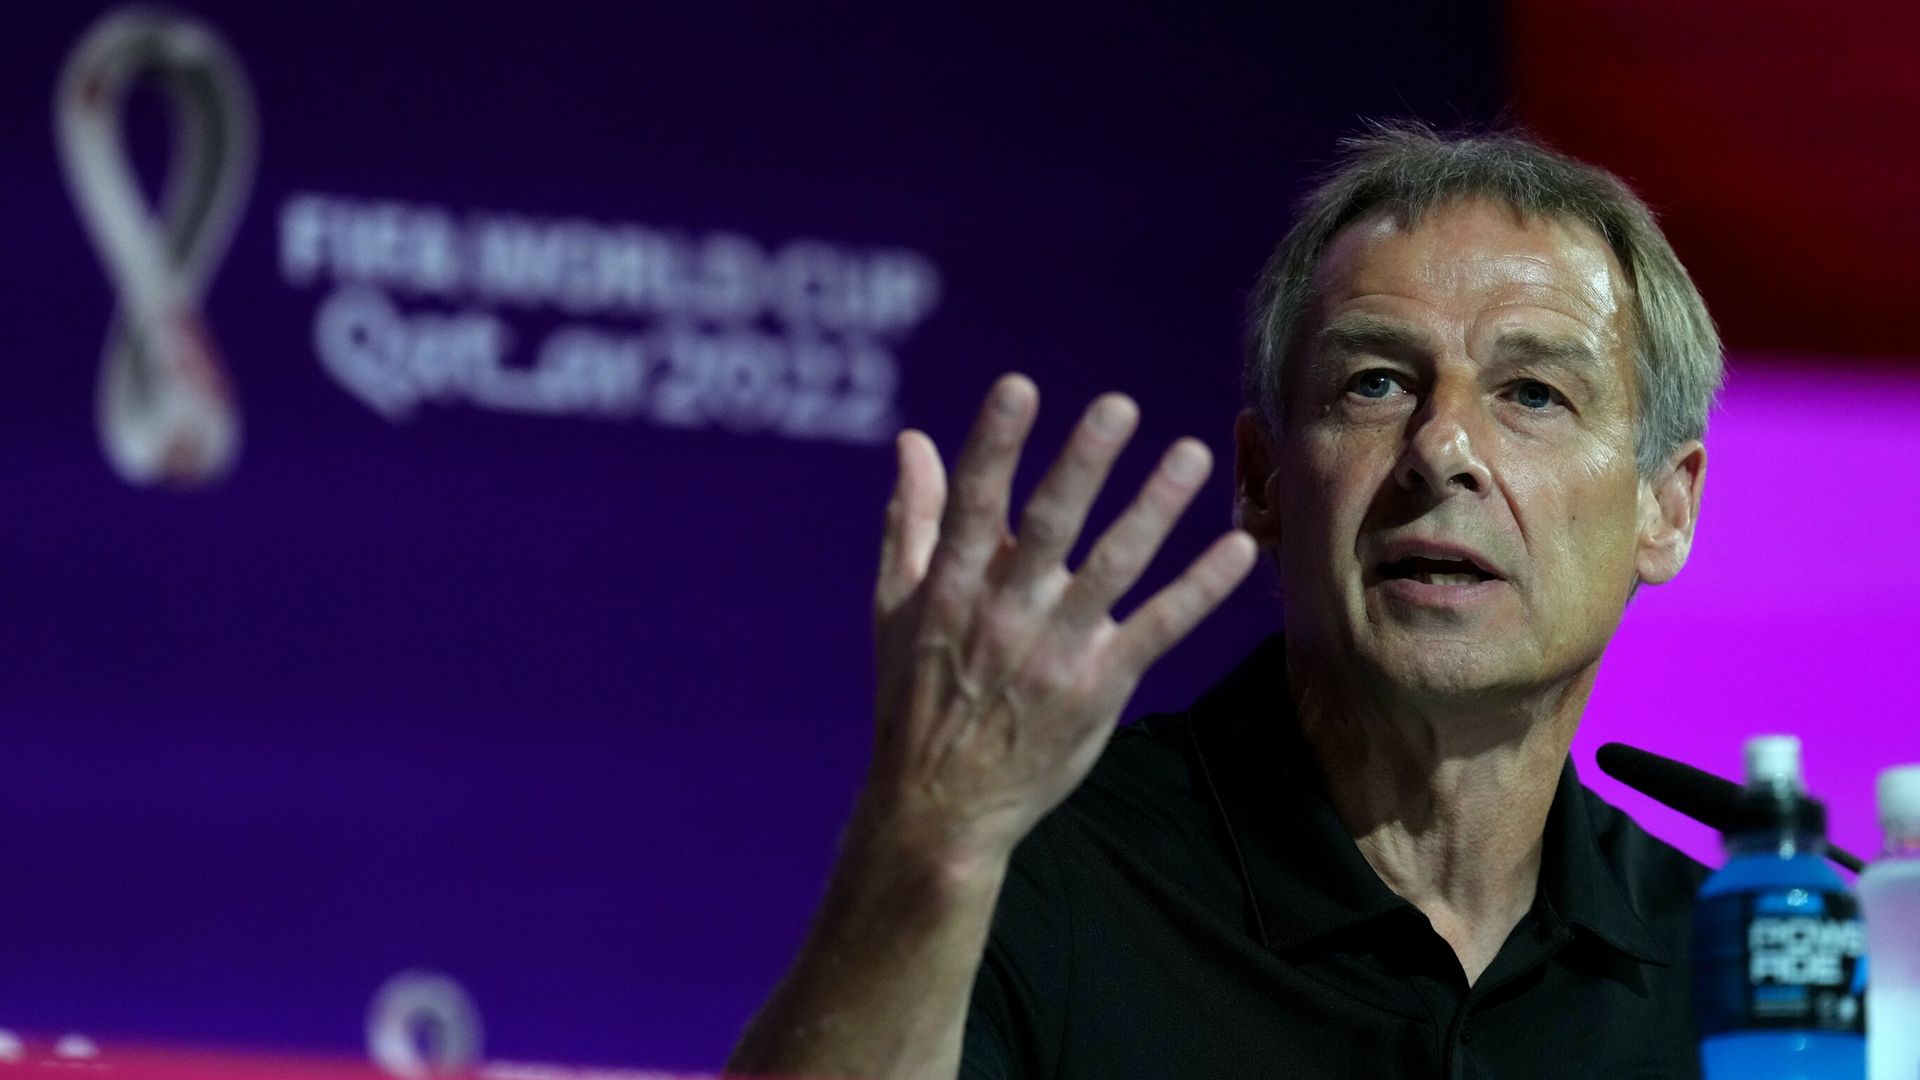 Klinsmann seeks to cool tensions in Queiroz row